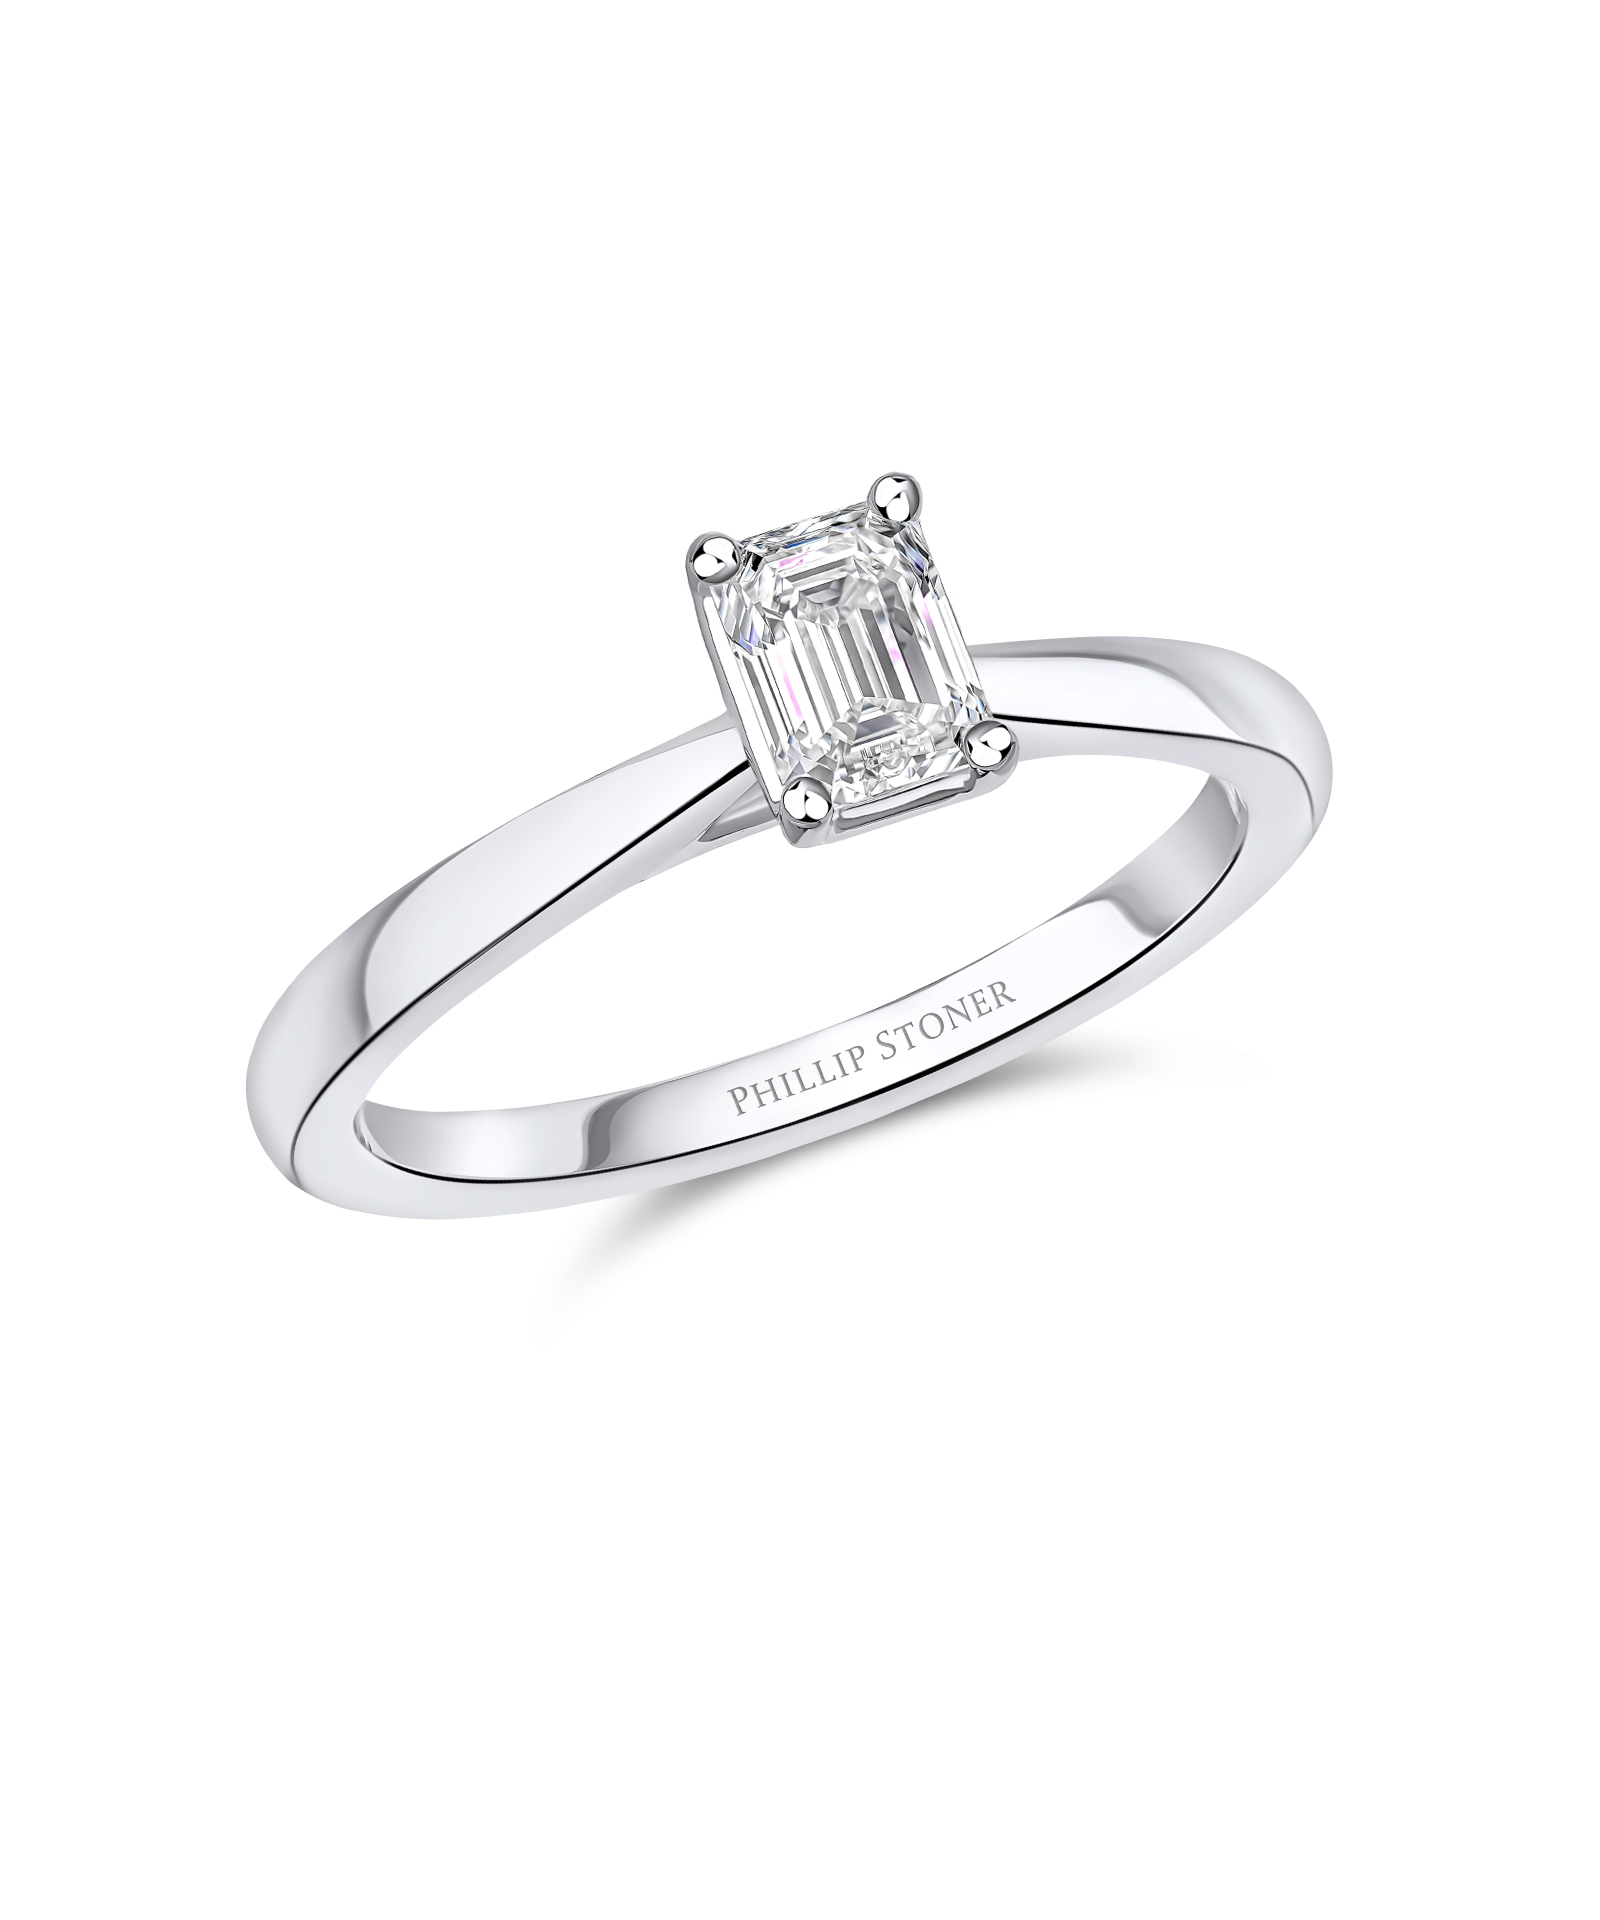 0.50ct Emerald Cut Diamond Solitaire Engagement Ring - Phillip Stoner The Jeweller